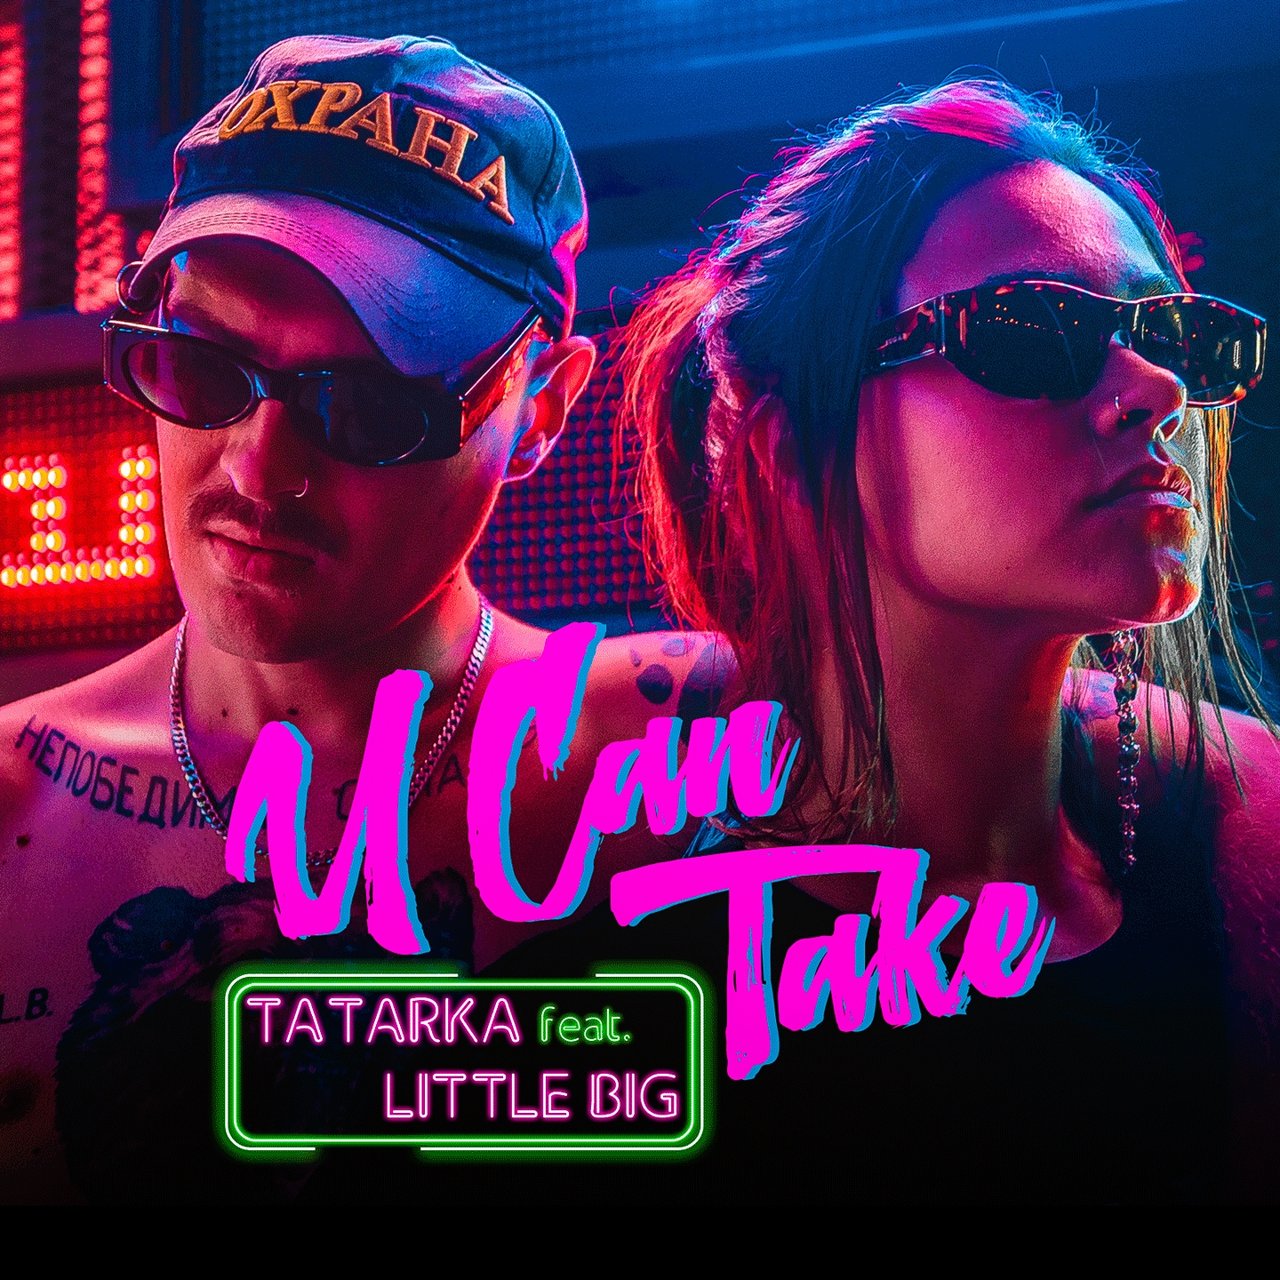 Tatarka featuring Little Big — U Can Take cover artwork